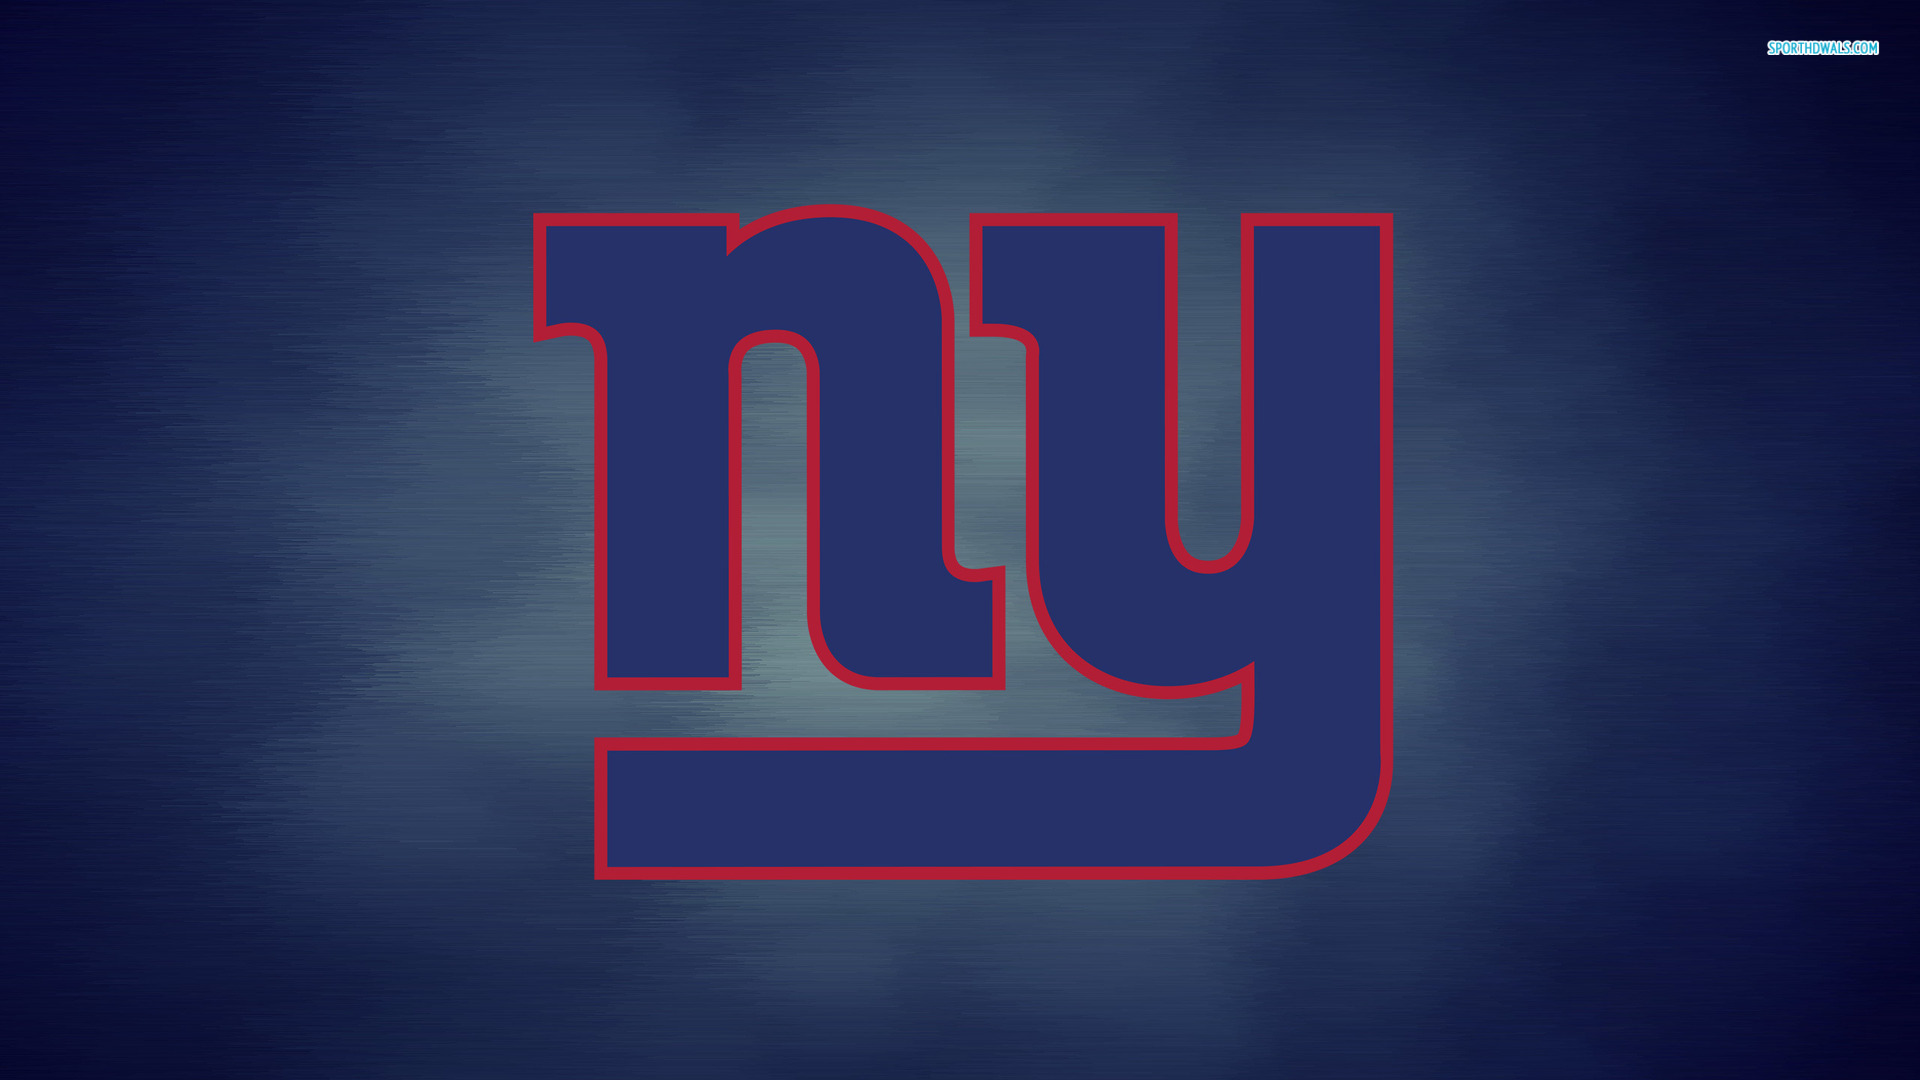 New York Giants Football Team Logo Wallpapers Hd Desktop And Mobile